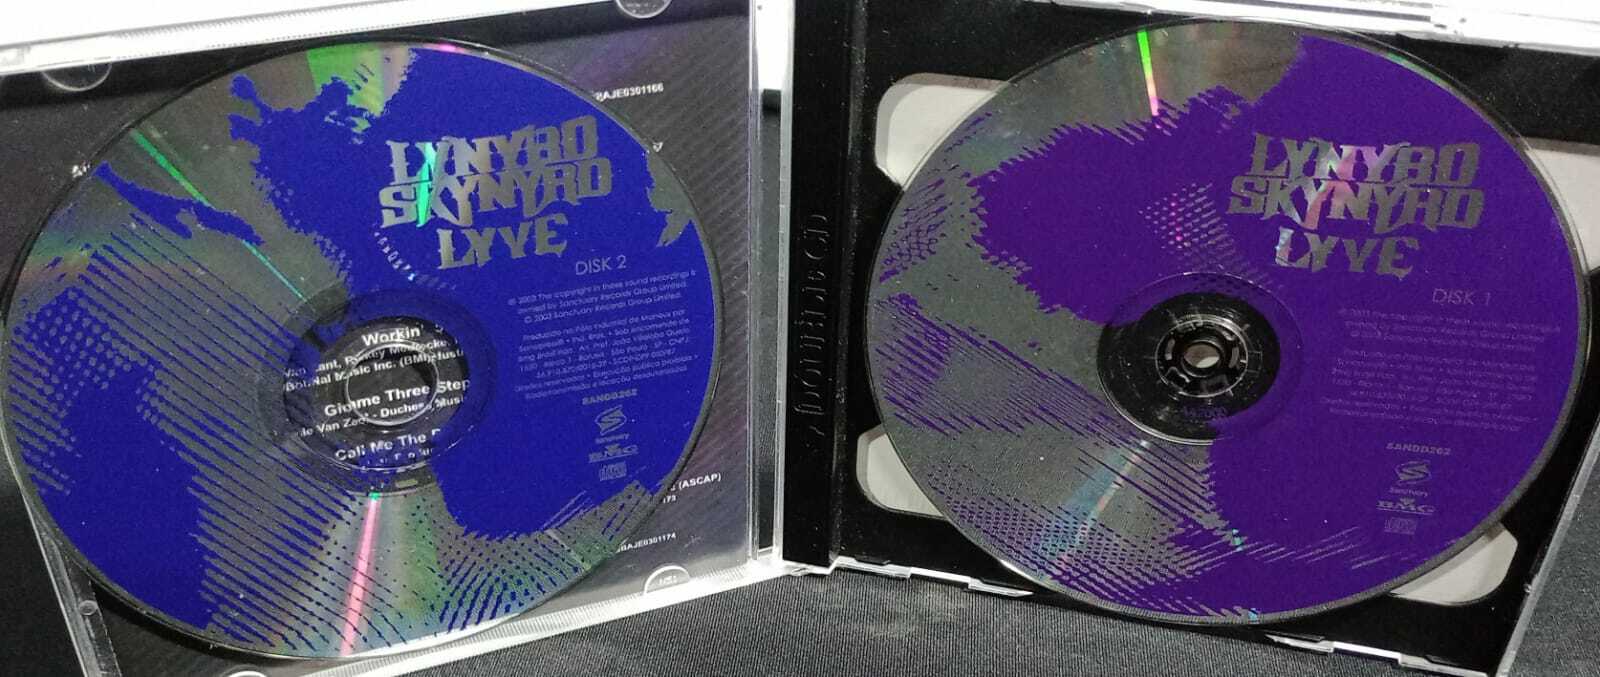 CD - Lynyrd Skynyrd - Lyve the Vicious Cycle Tour (Duplo)